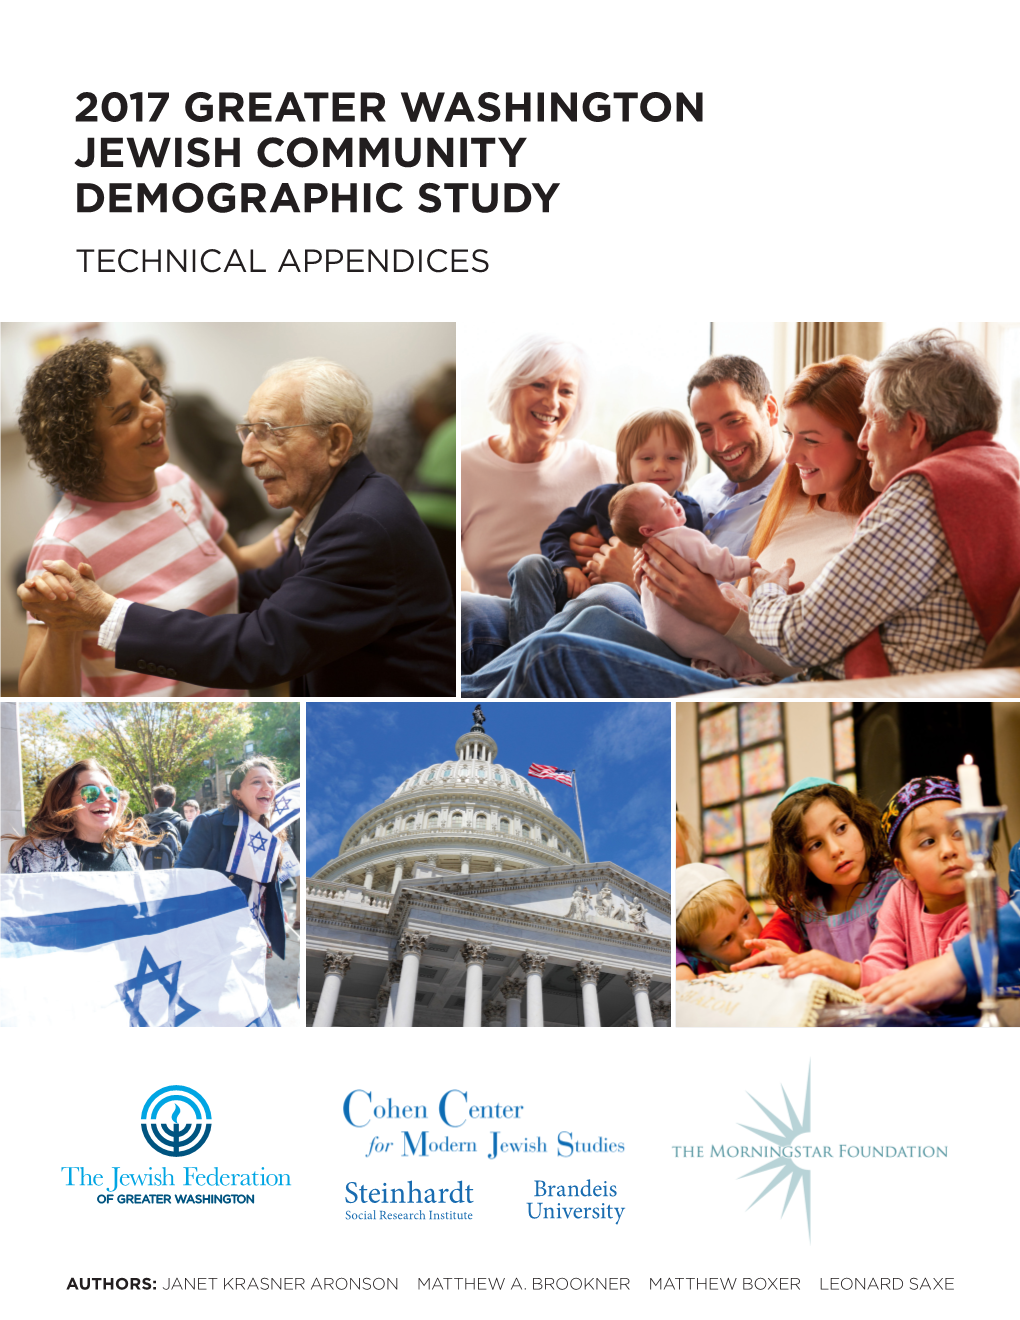 2017 Greater Washington Jewish Community Demographic Study Technical Appendices